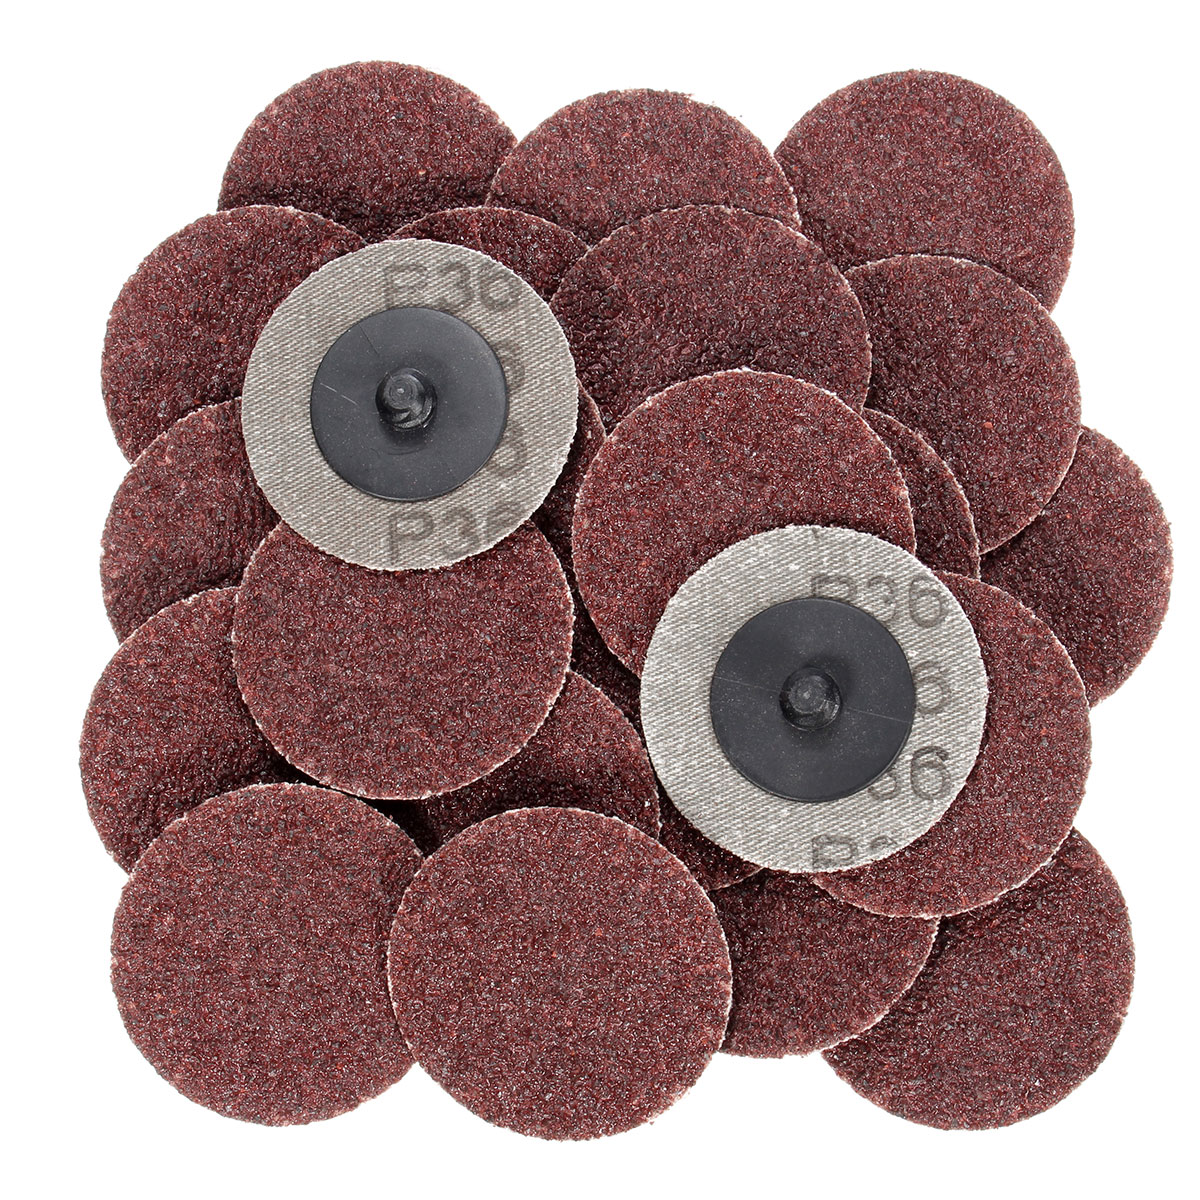 

25pcs 2 Inch 36 Grit R-Type Abrasive Sanding Discs Roll Lock Sanding Pads